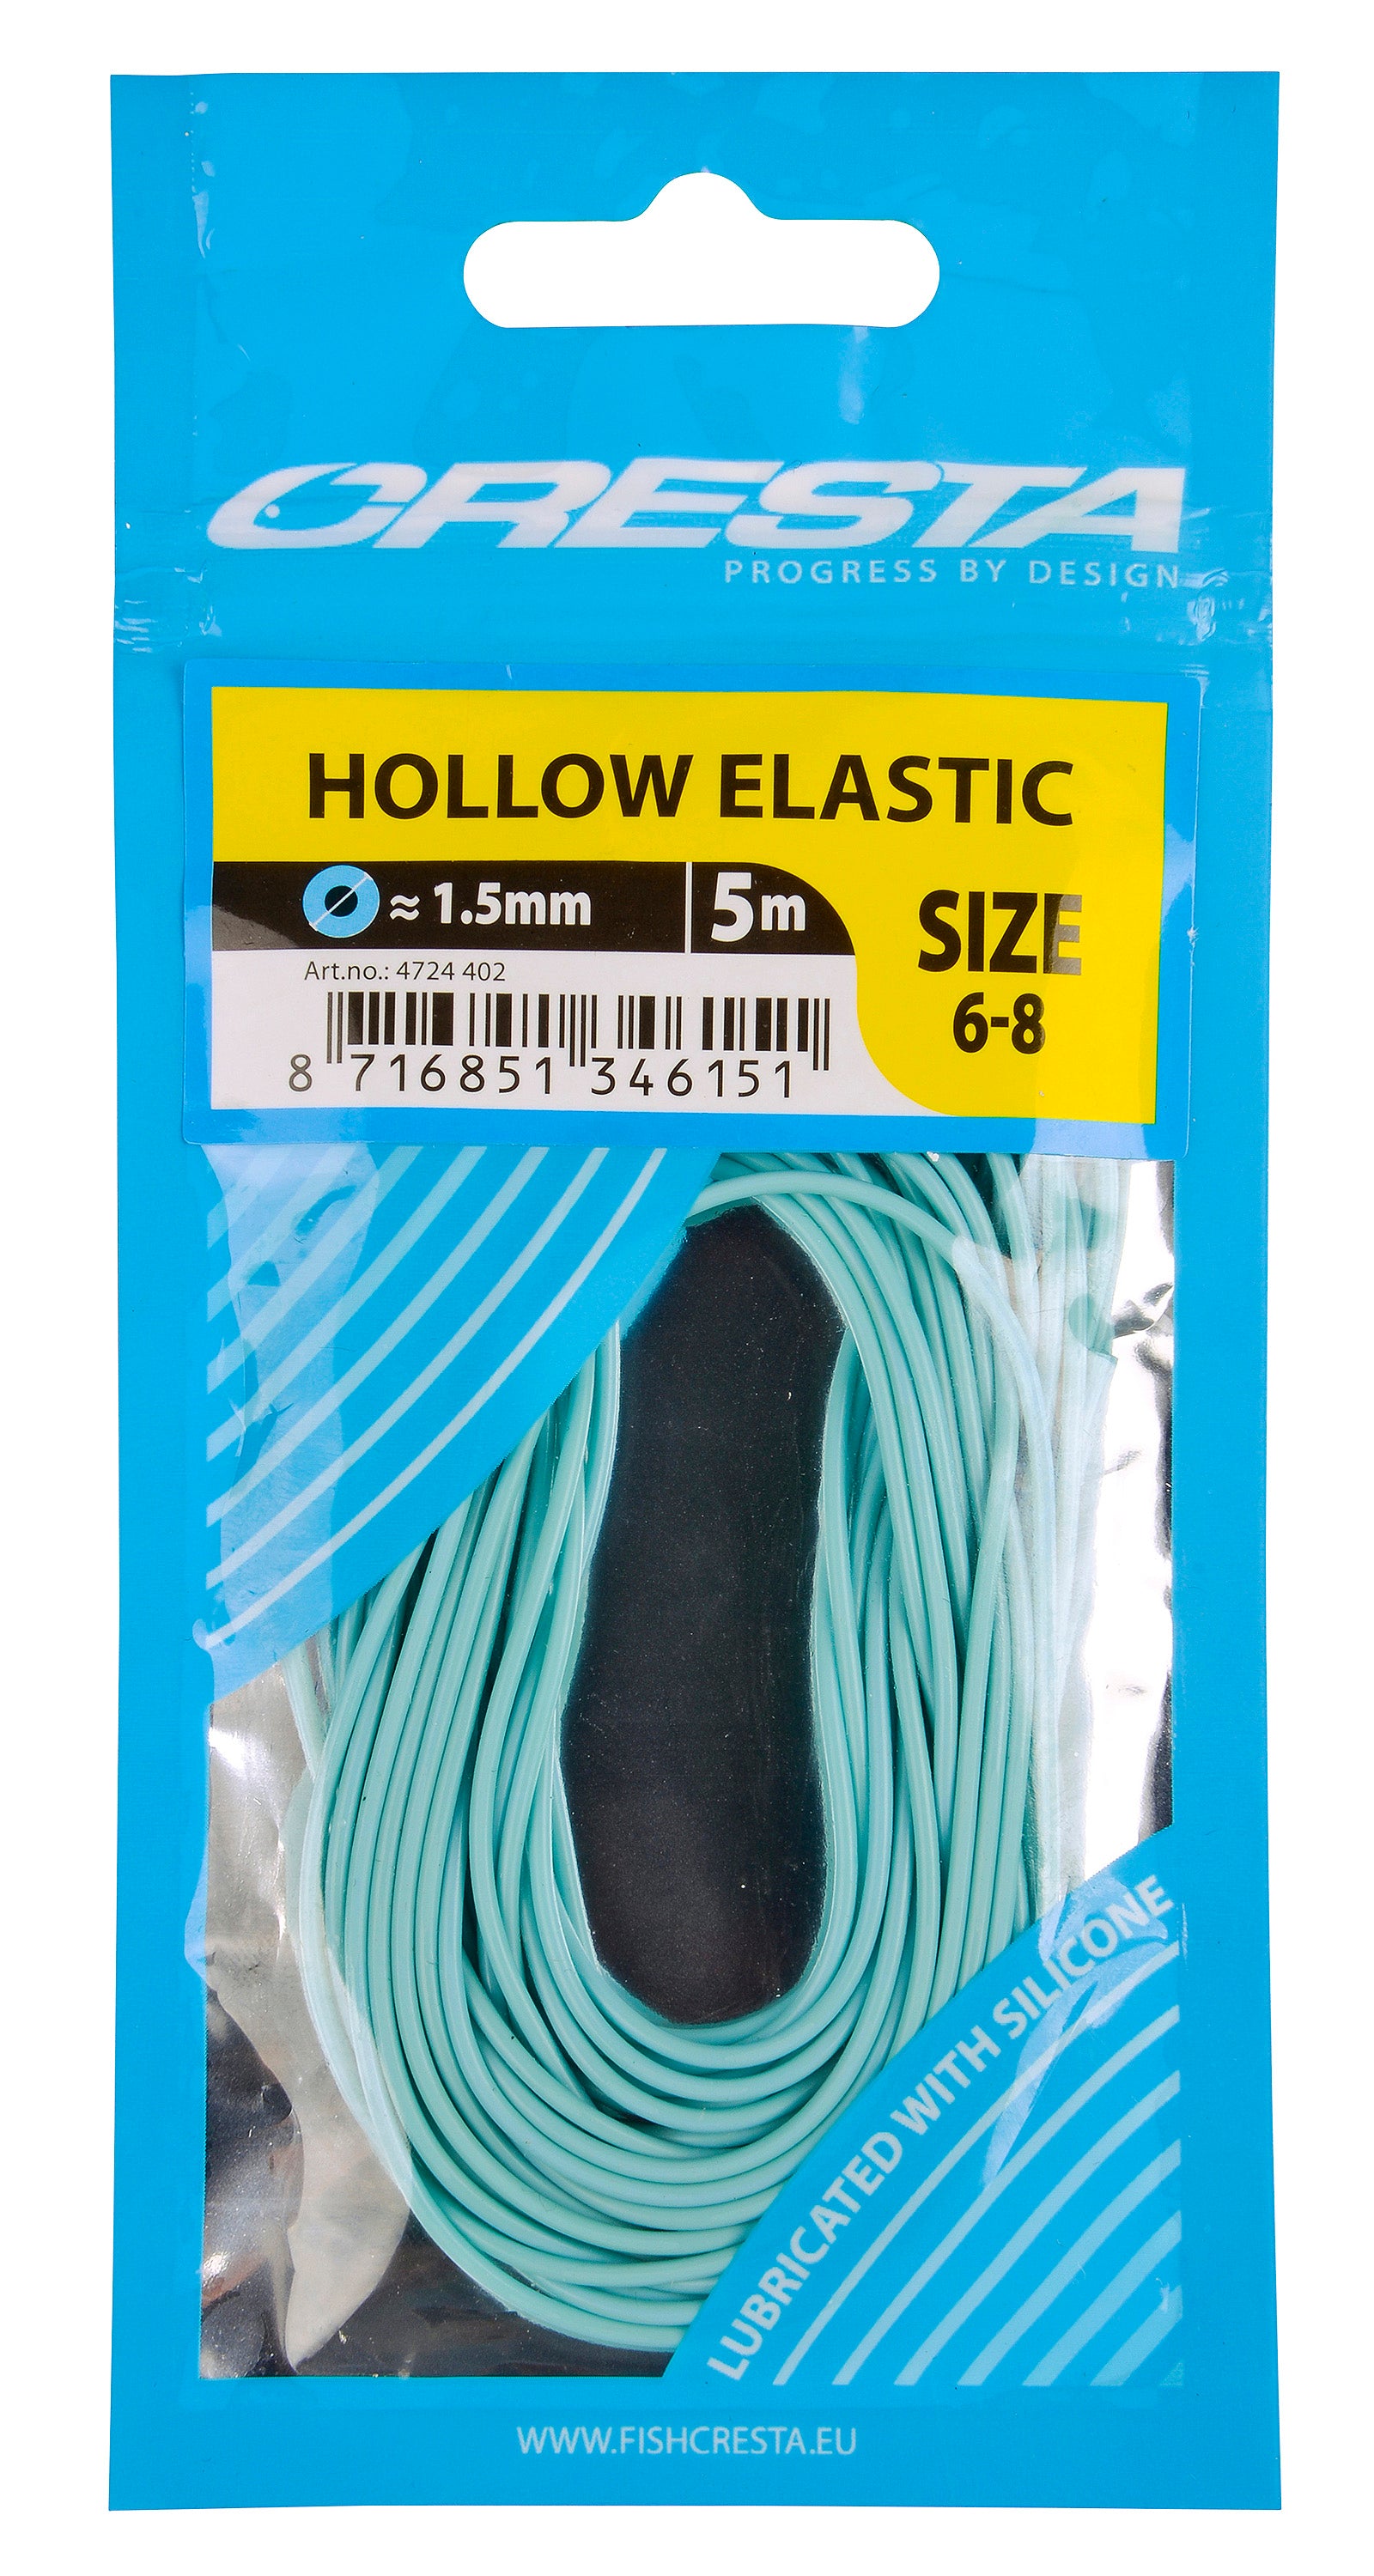 HOLLOW ELASTIC - KM-Tackle